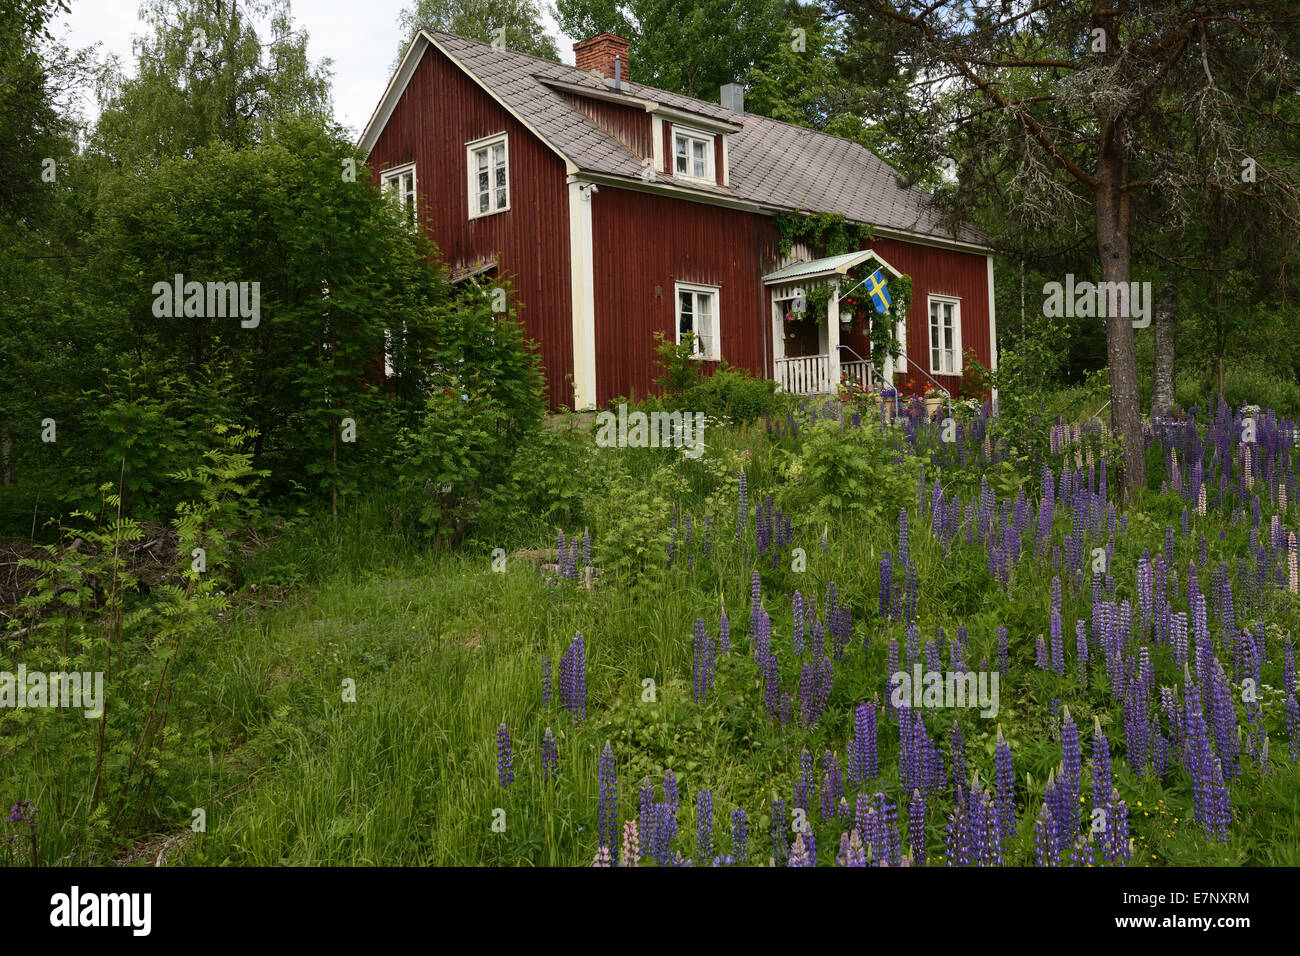 Típica casa, casa Roja, jardín, altramuces, Mängen, Wärmland, Värmlands Län, Noruega, Europa Foto de stock